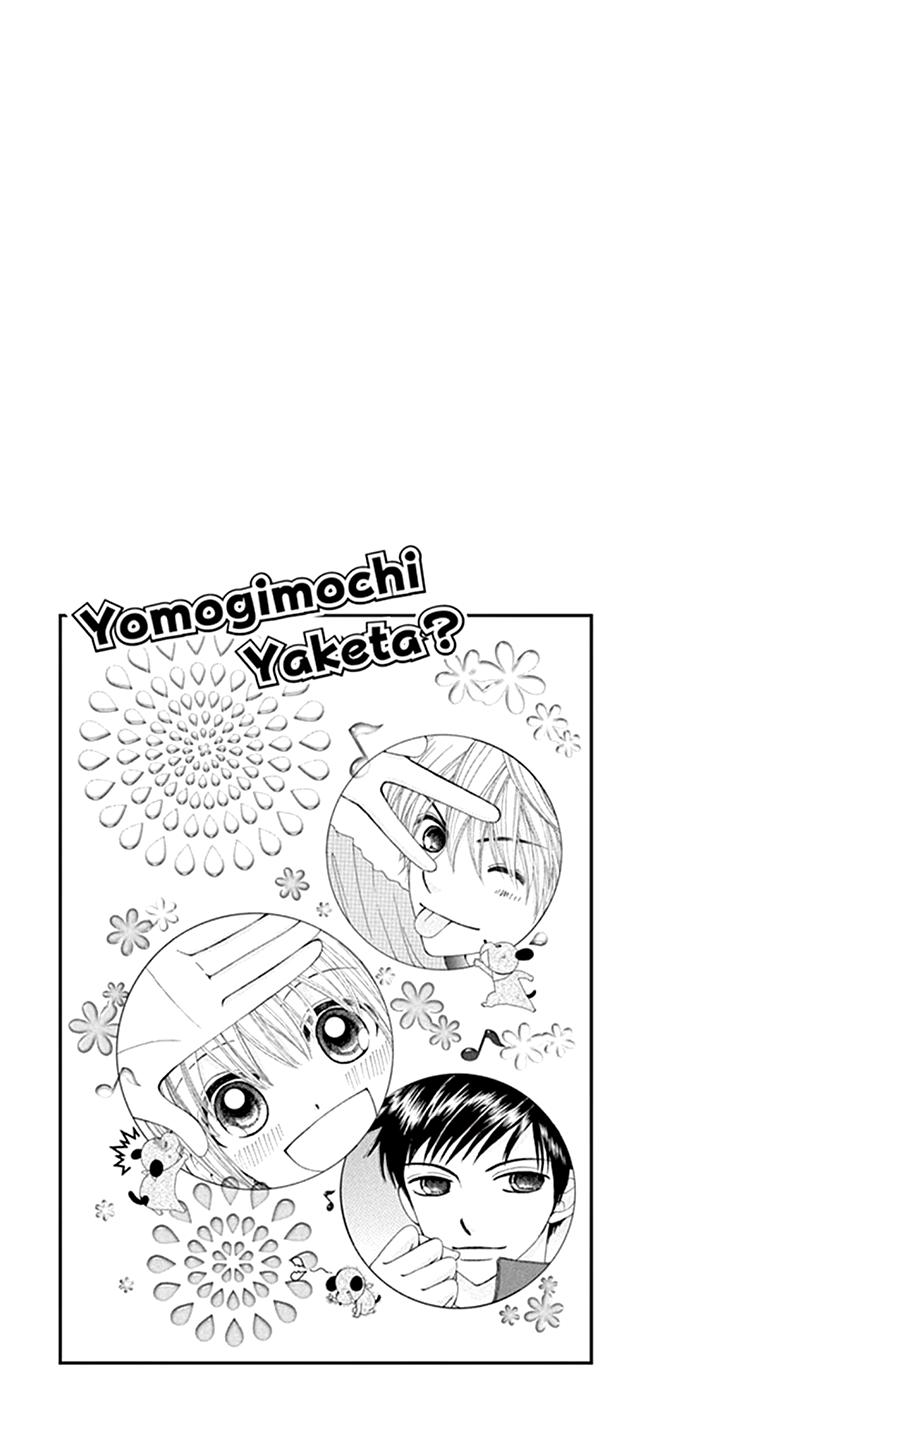 Yomogi Mochi Yaketa - episode 18 - 41